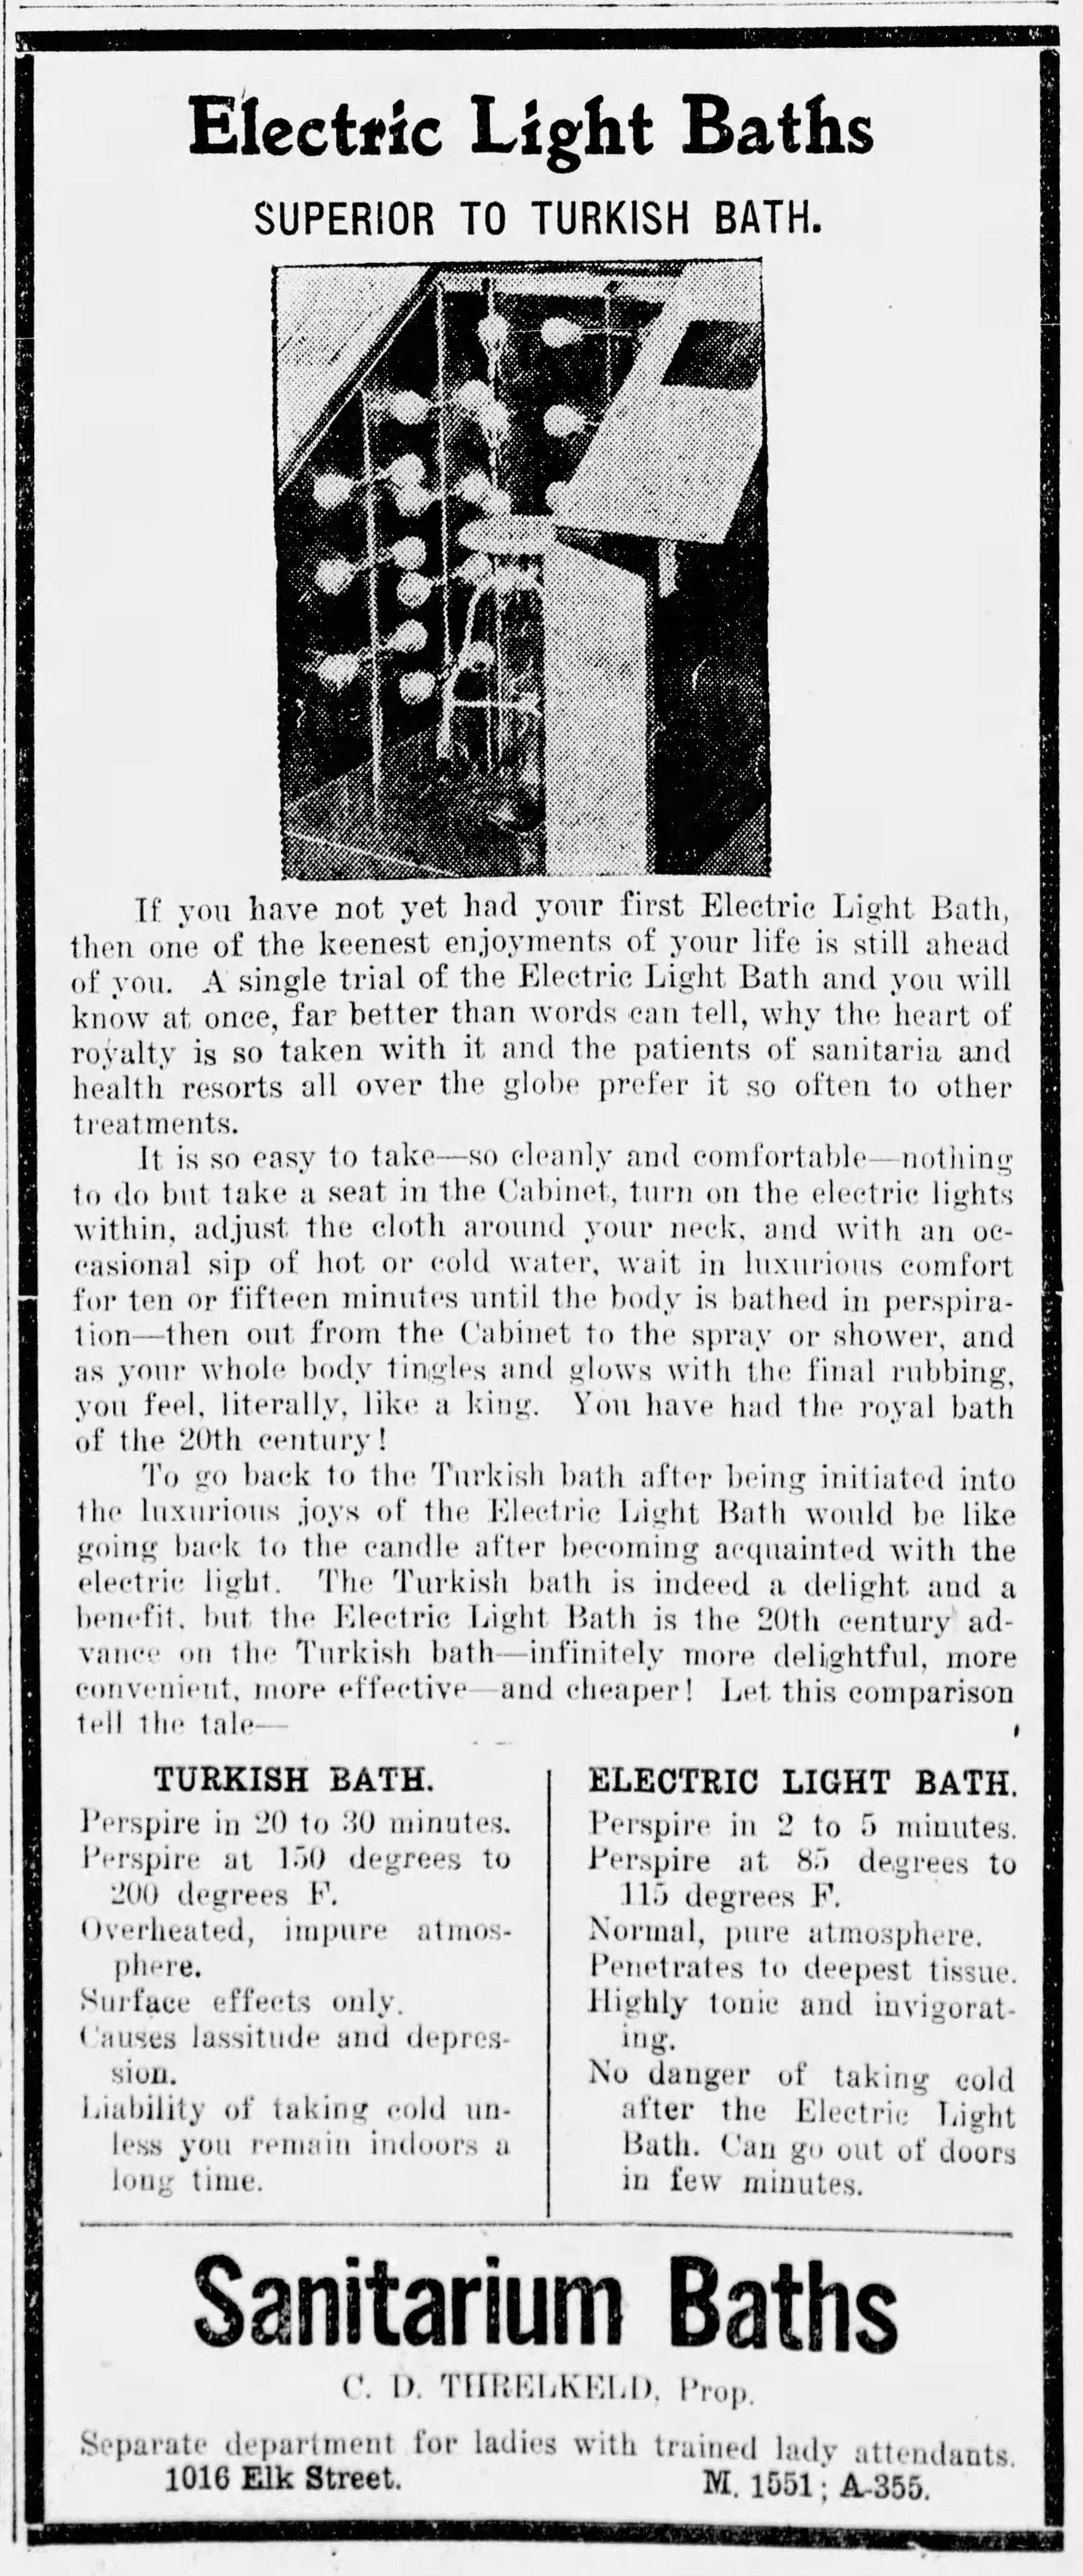 Electric Light Baths advertisement